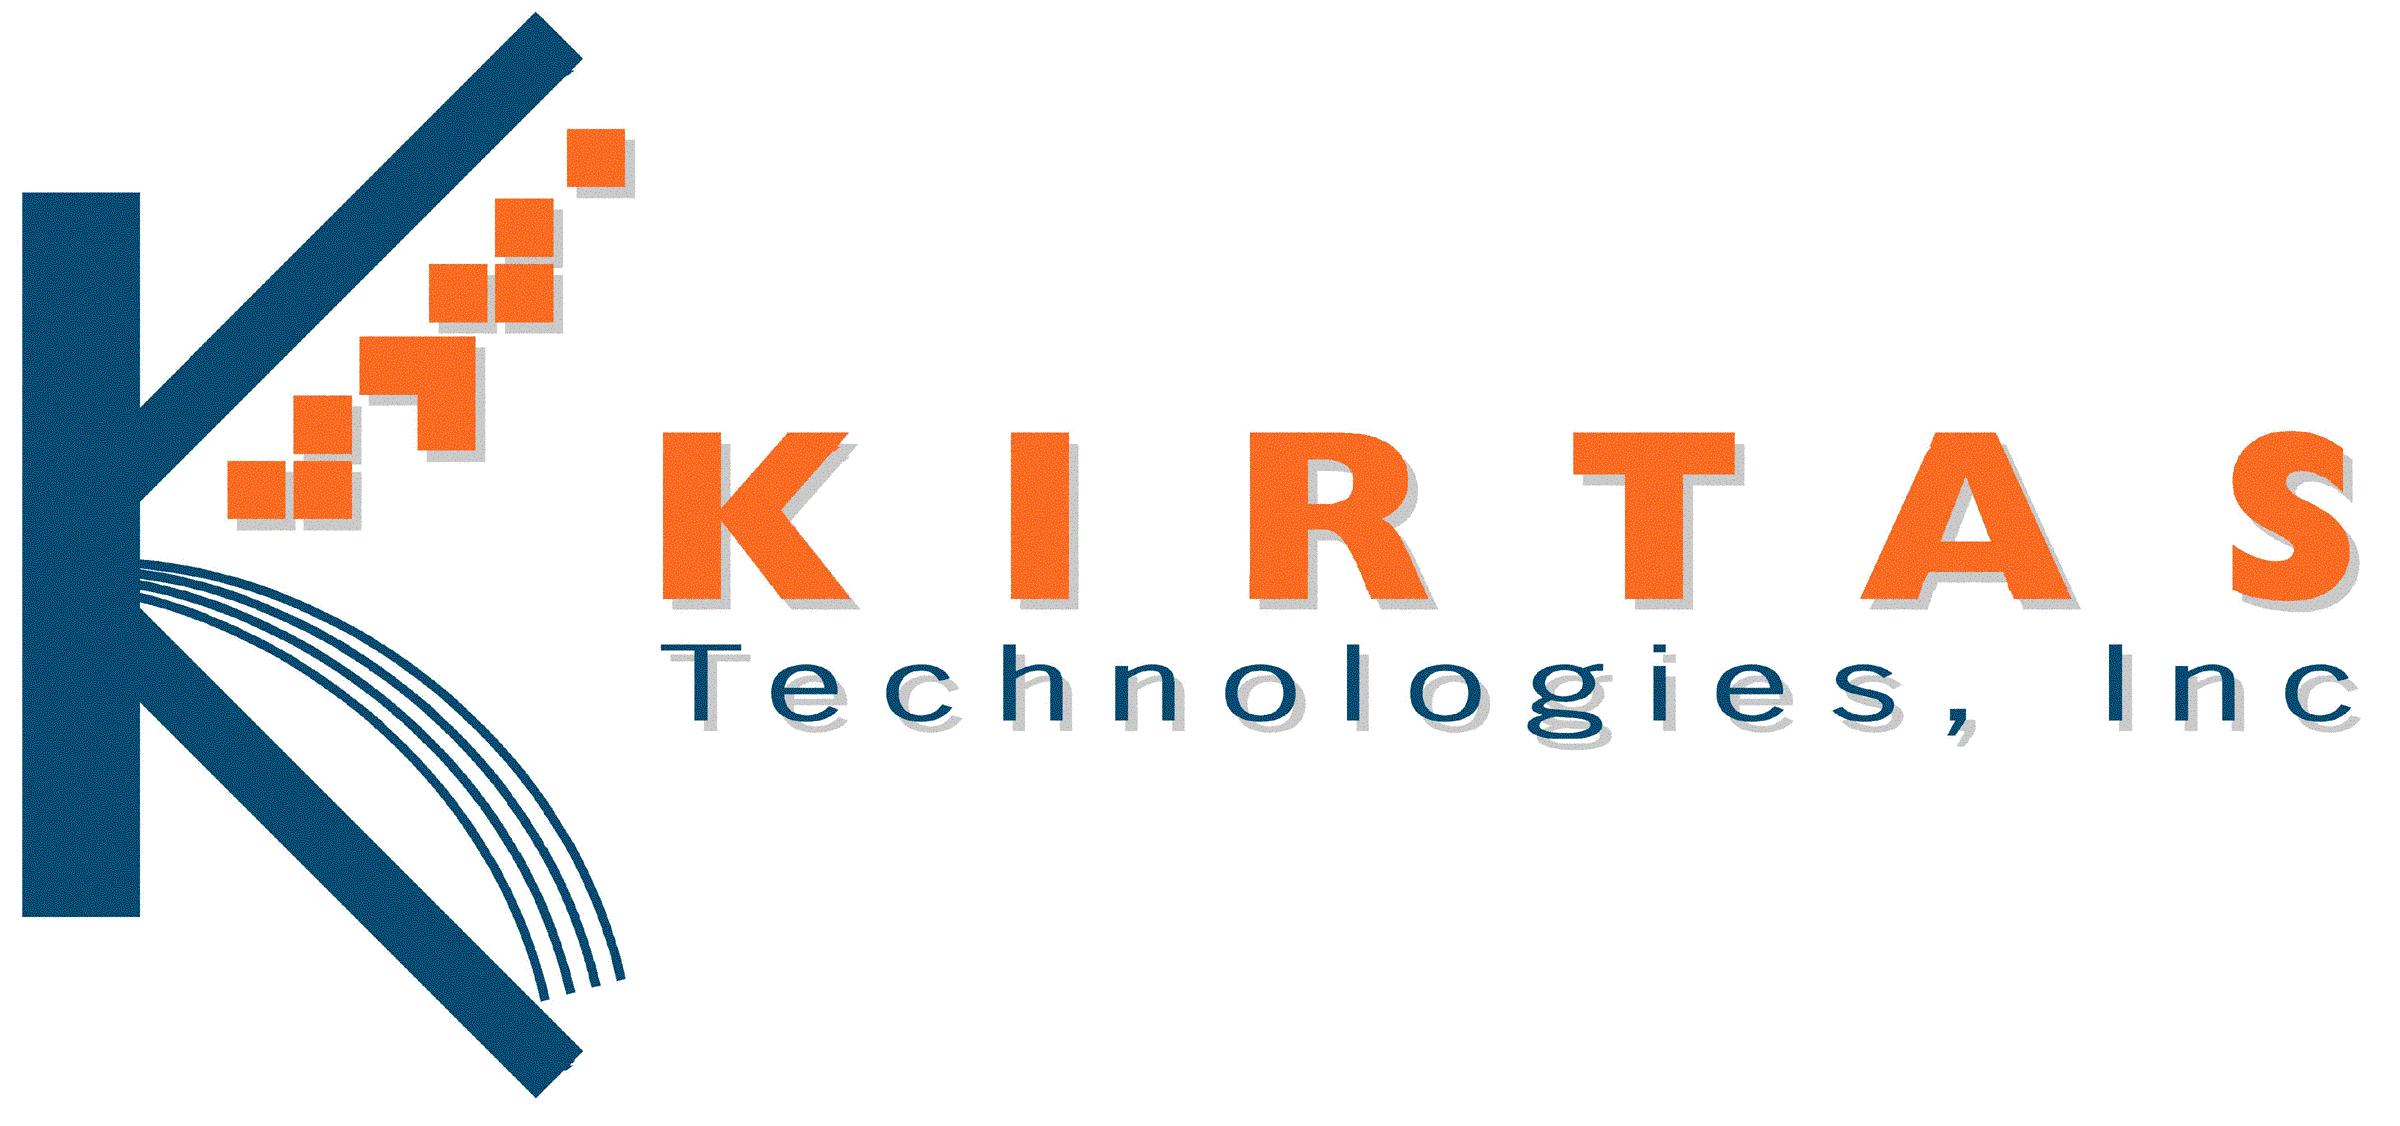 The Kirtas Technologies logo